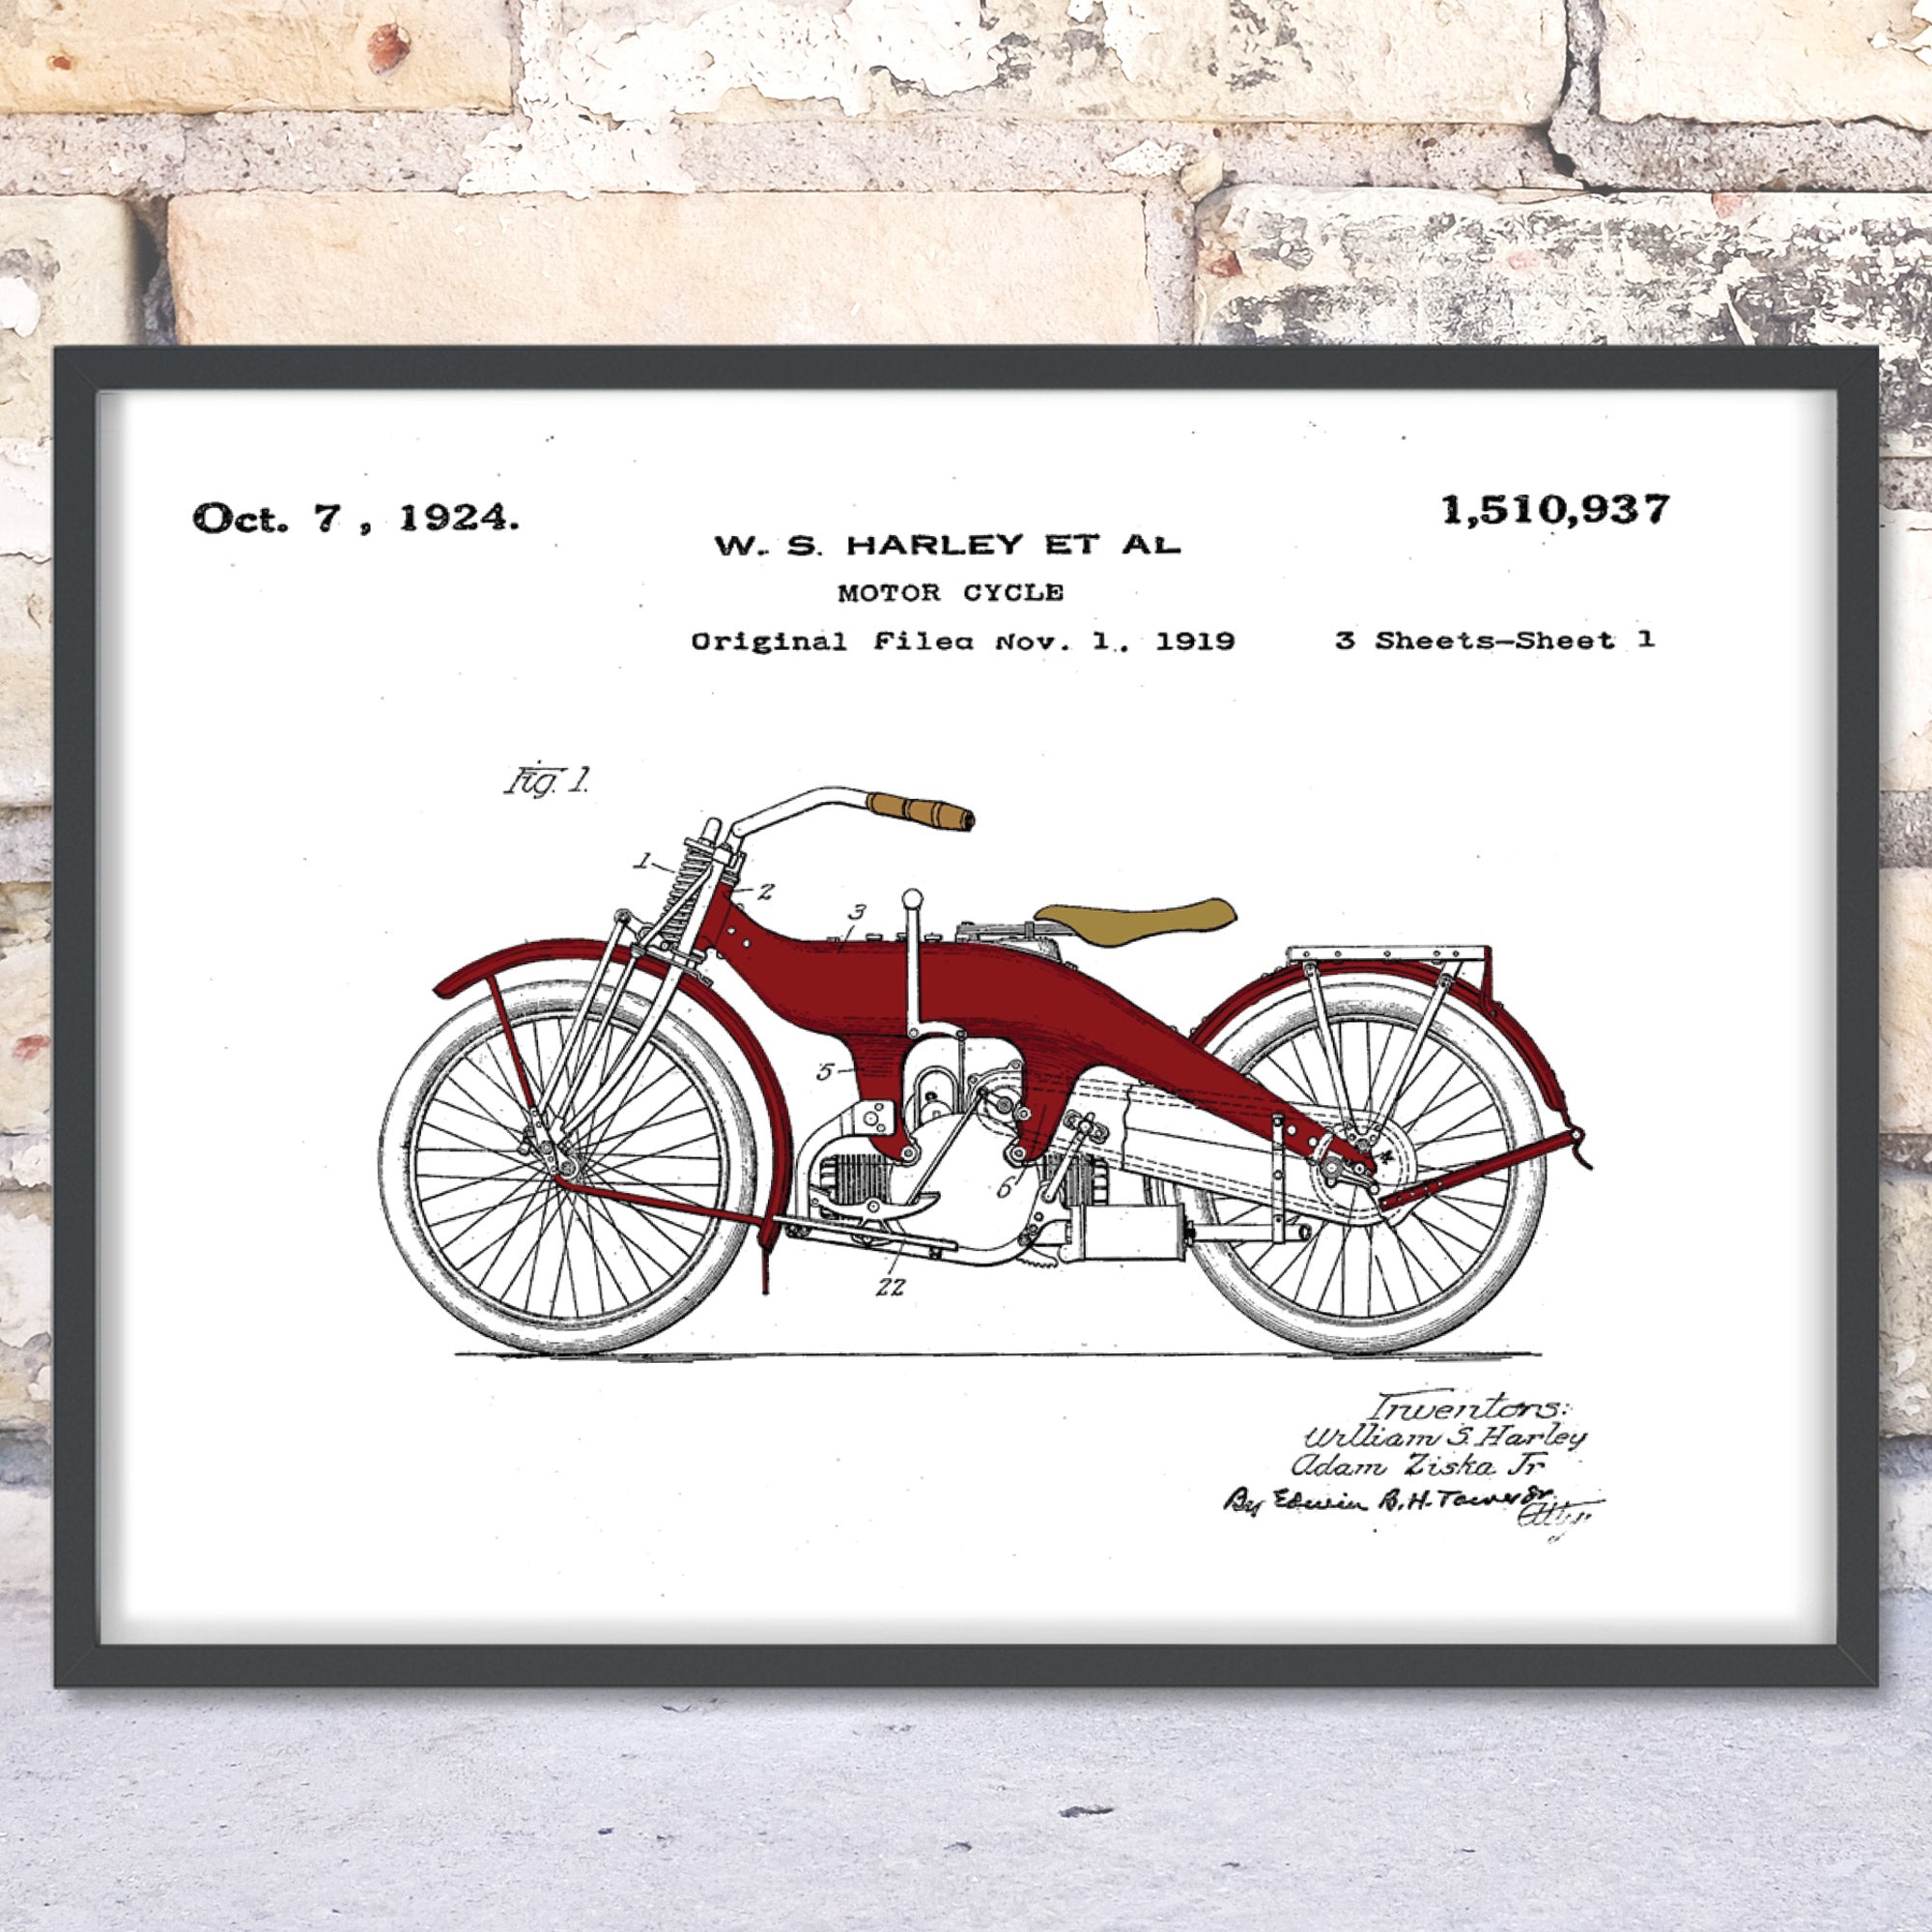 Harley Davidson Motorcycle Framed Patent Motorbike prints patent print